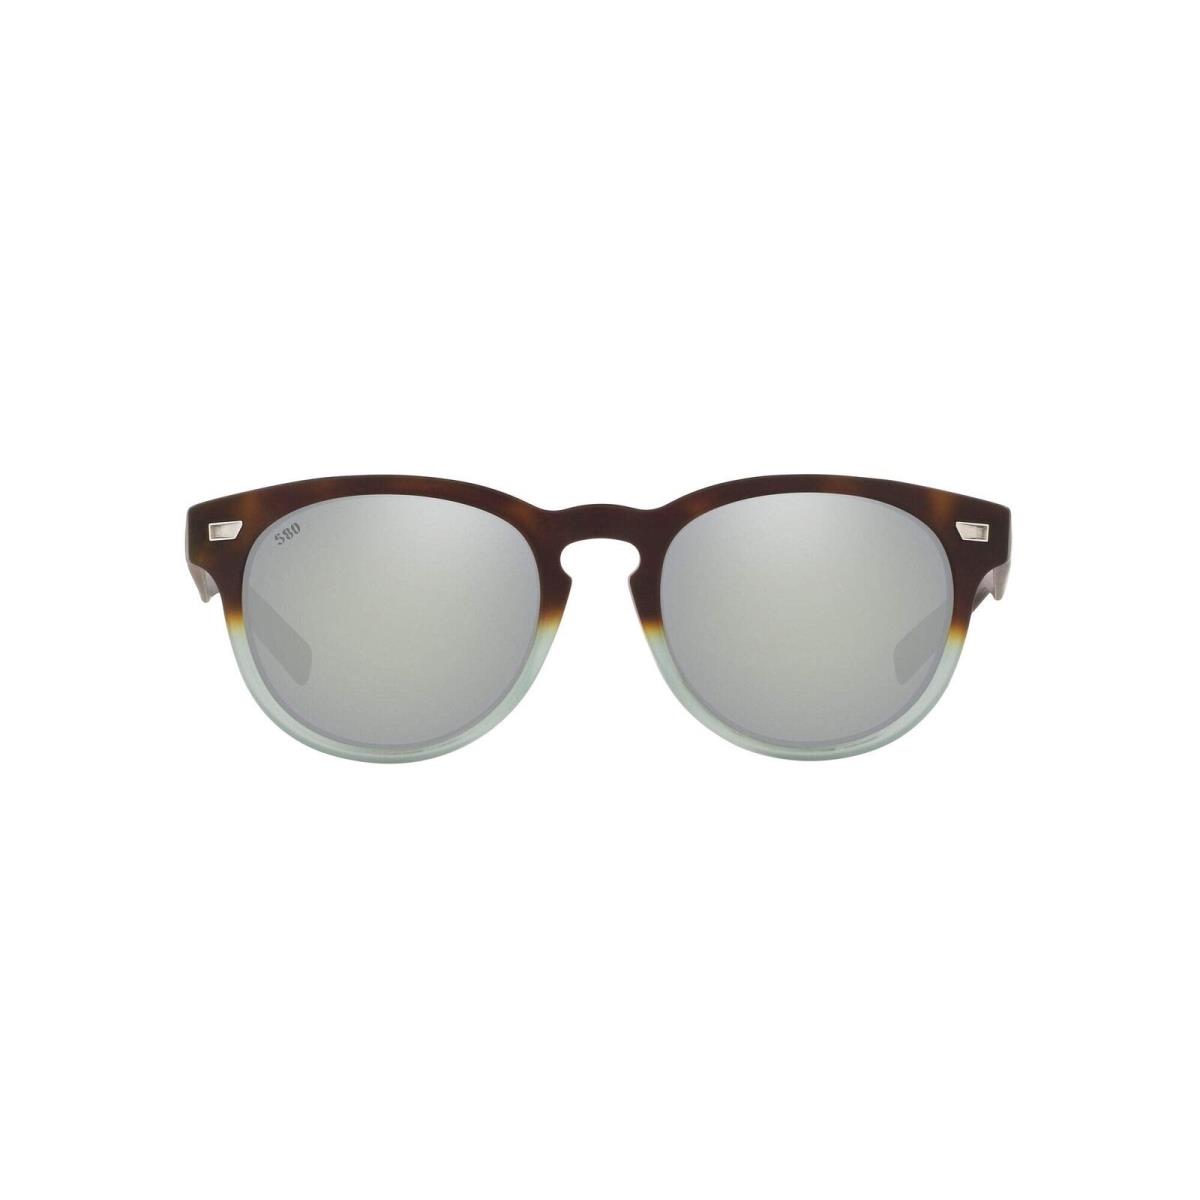 DEL207OSGGLP Mens Costa Del Mar Polarized Sunglasses - Frame: Gray, Lens: Gray